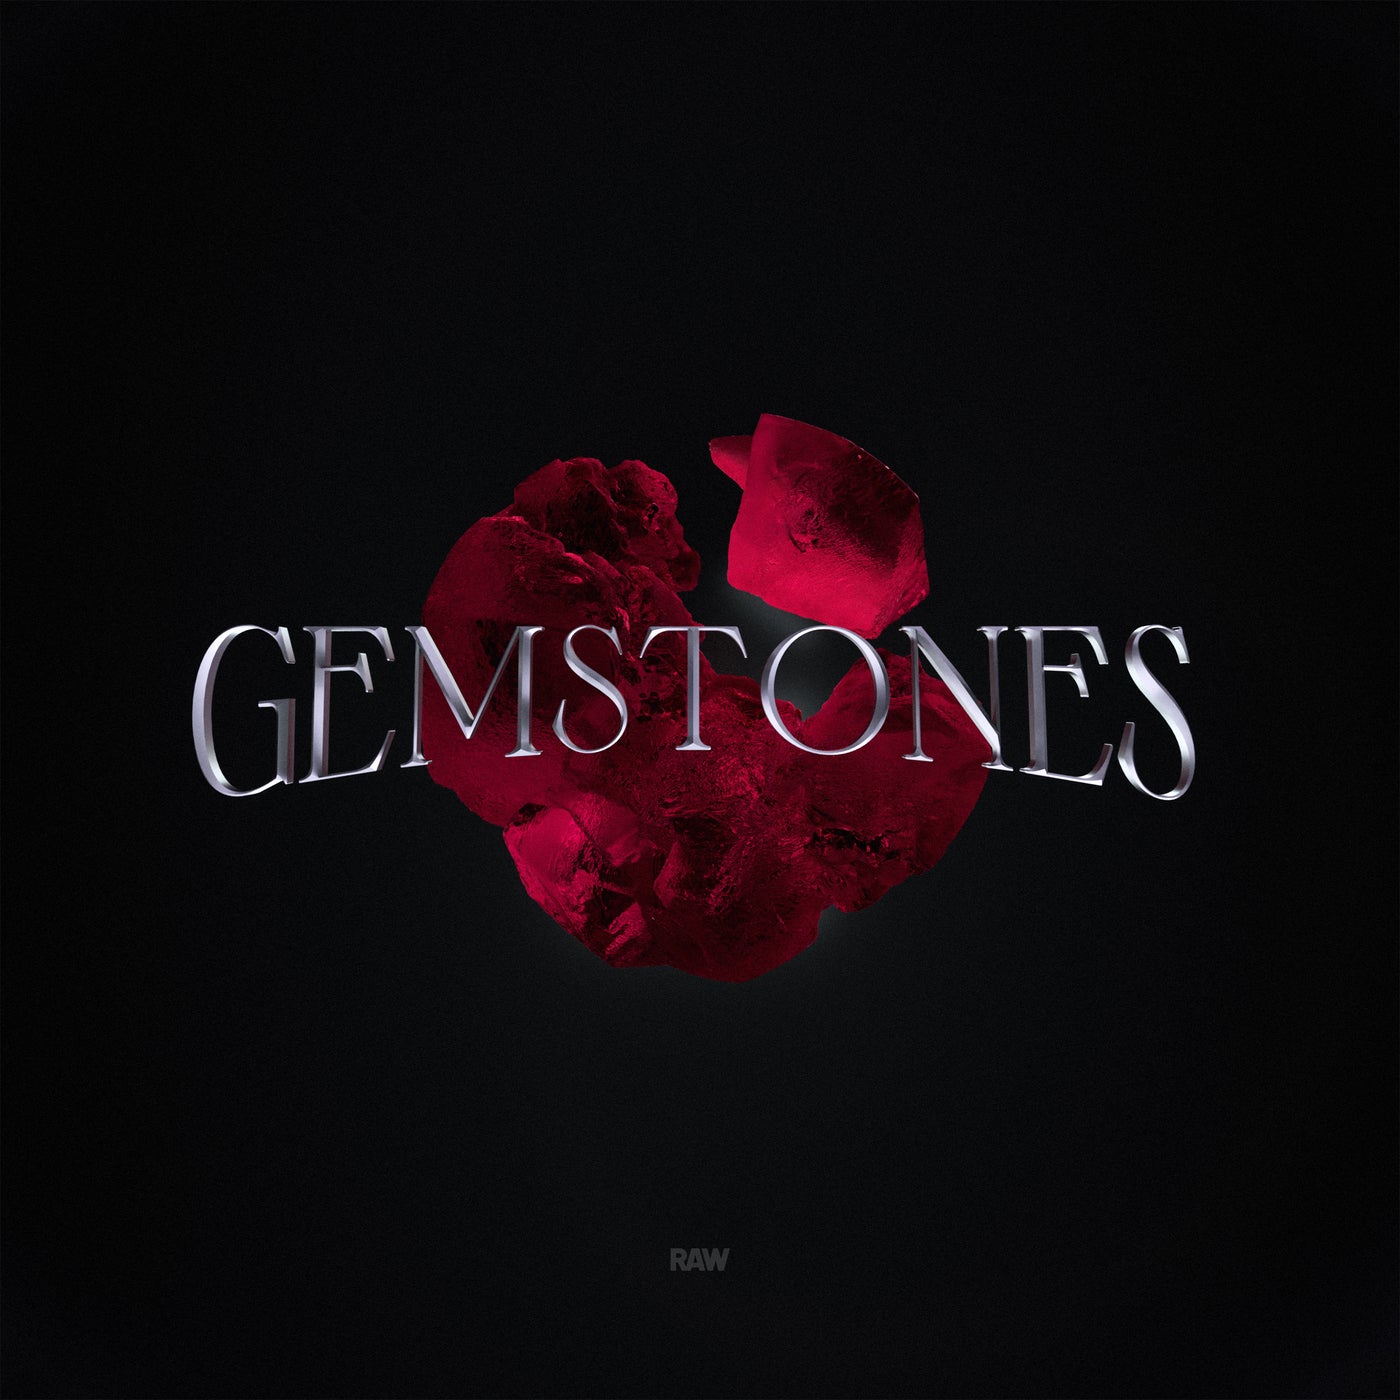 Gemstones Ruby